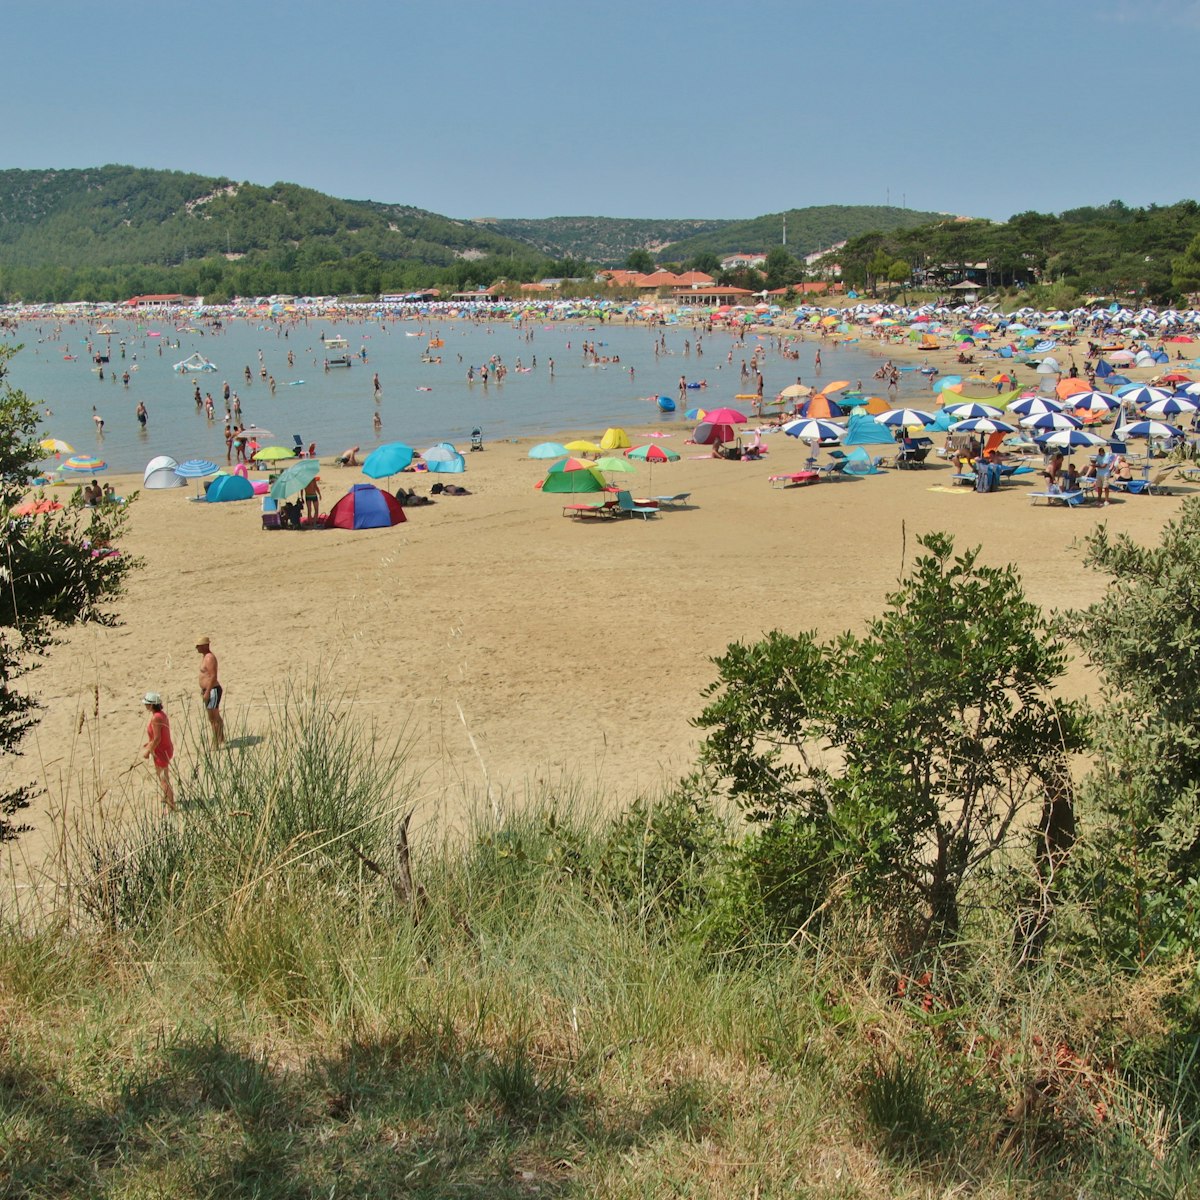 Rab island, Croatia - July 19, 2018: The Paradise beach in Lopar, Croatia. South-east Europe.